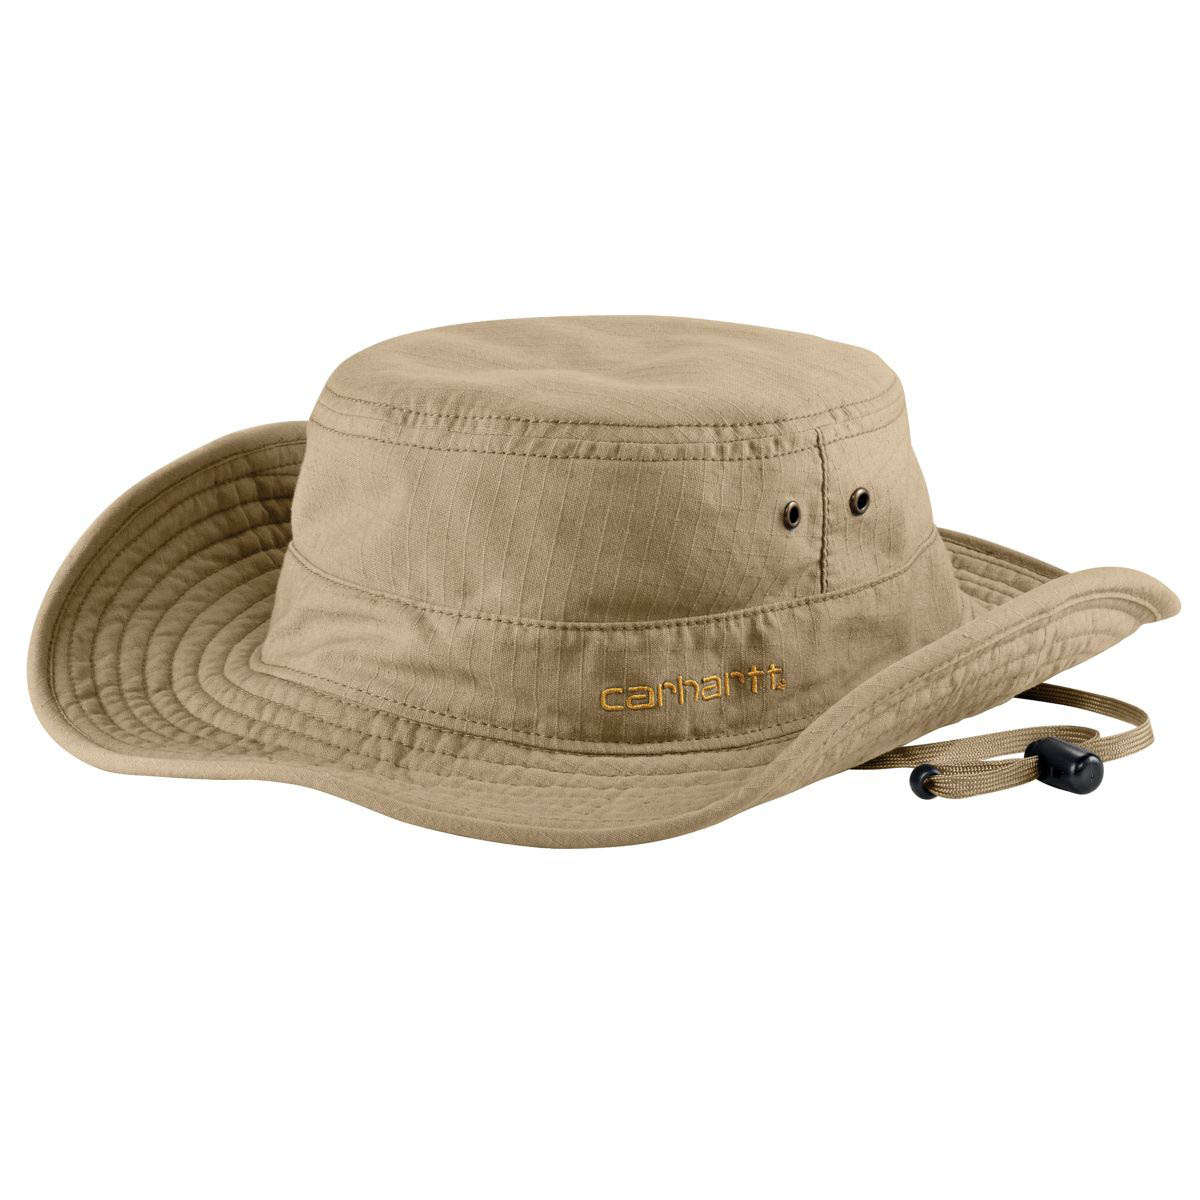 Carhartt Men's Billings Hat